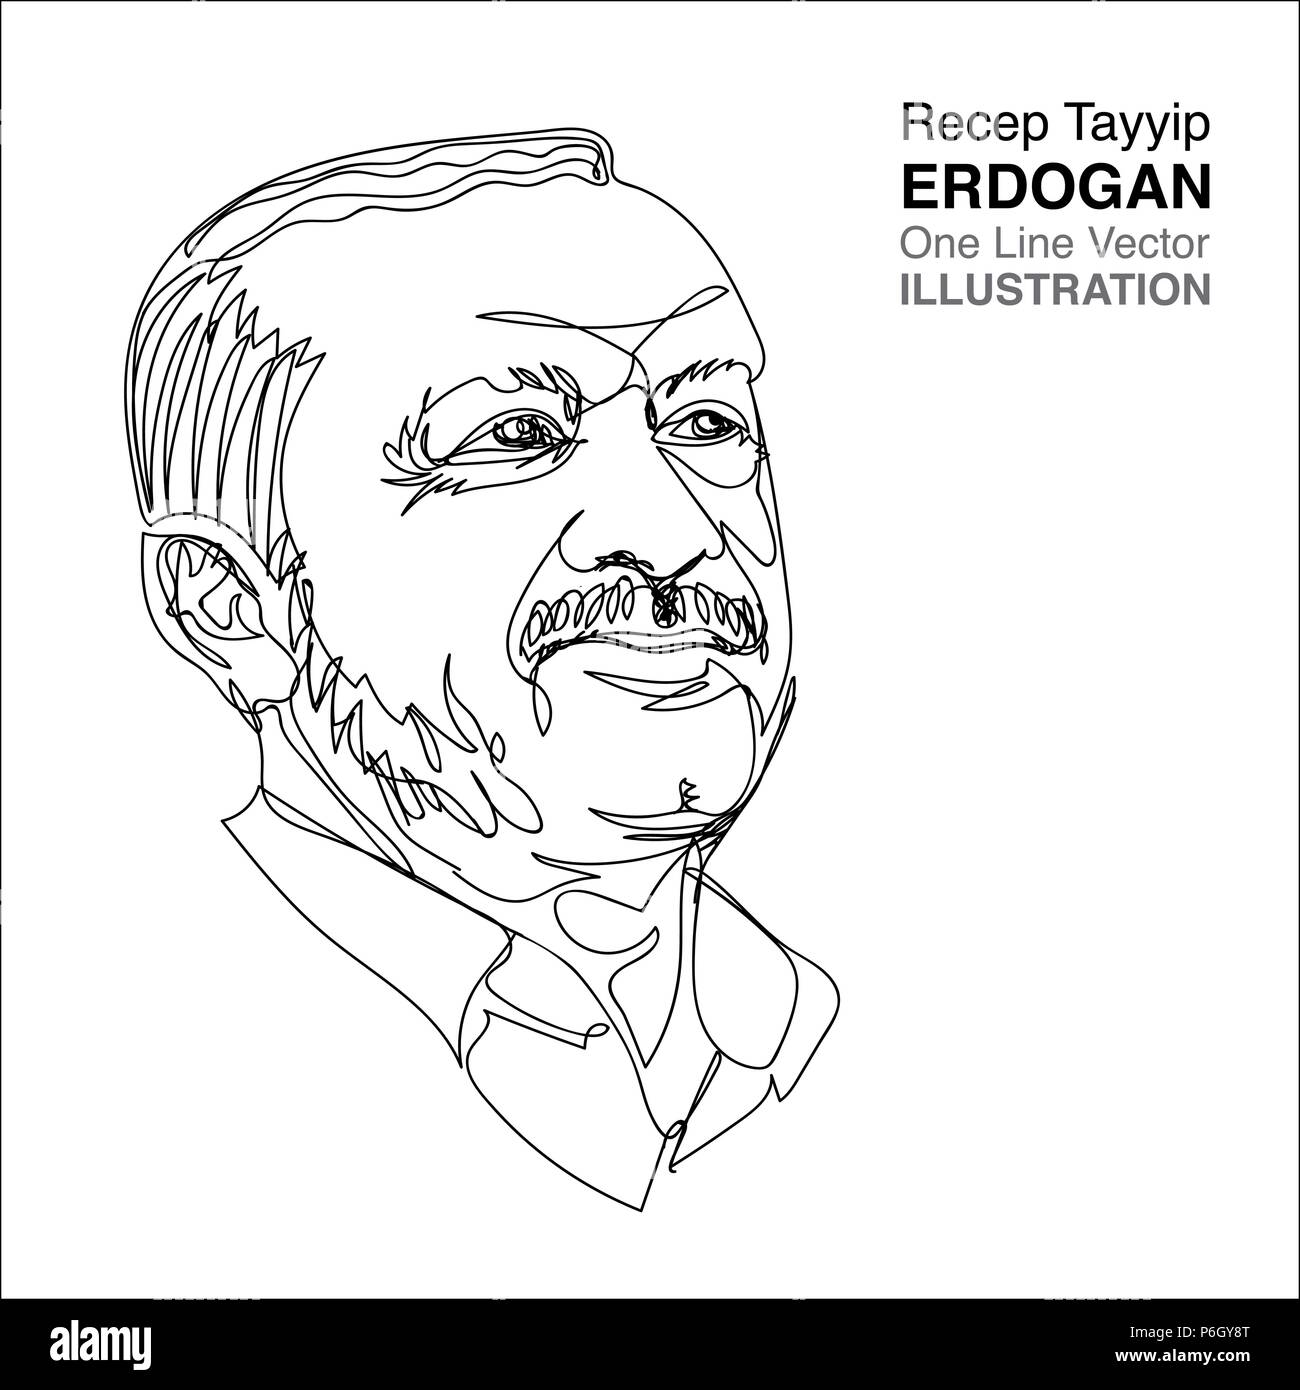 30 June 2018 : President of Turkey president, Recep Tayyip Erdogan, one line drawing portrait. Illustration in Thailand by Solahuddean Gariya. Stock Vector